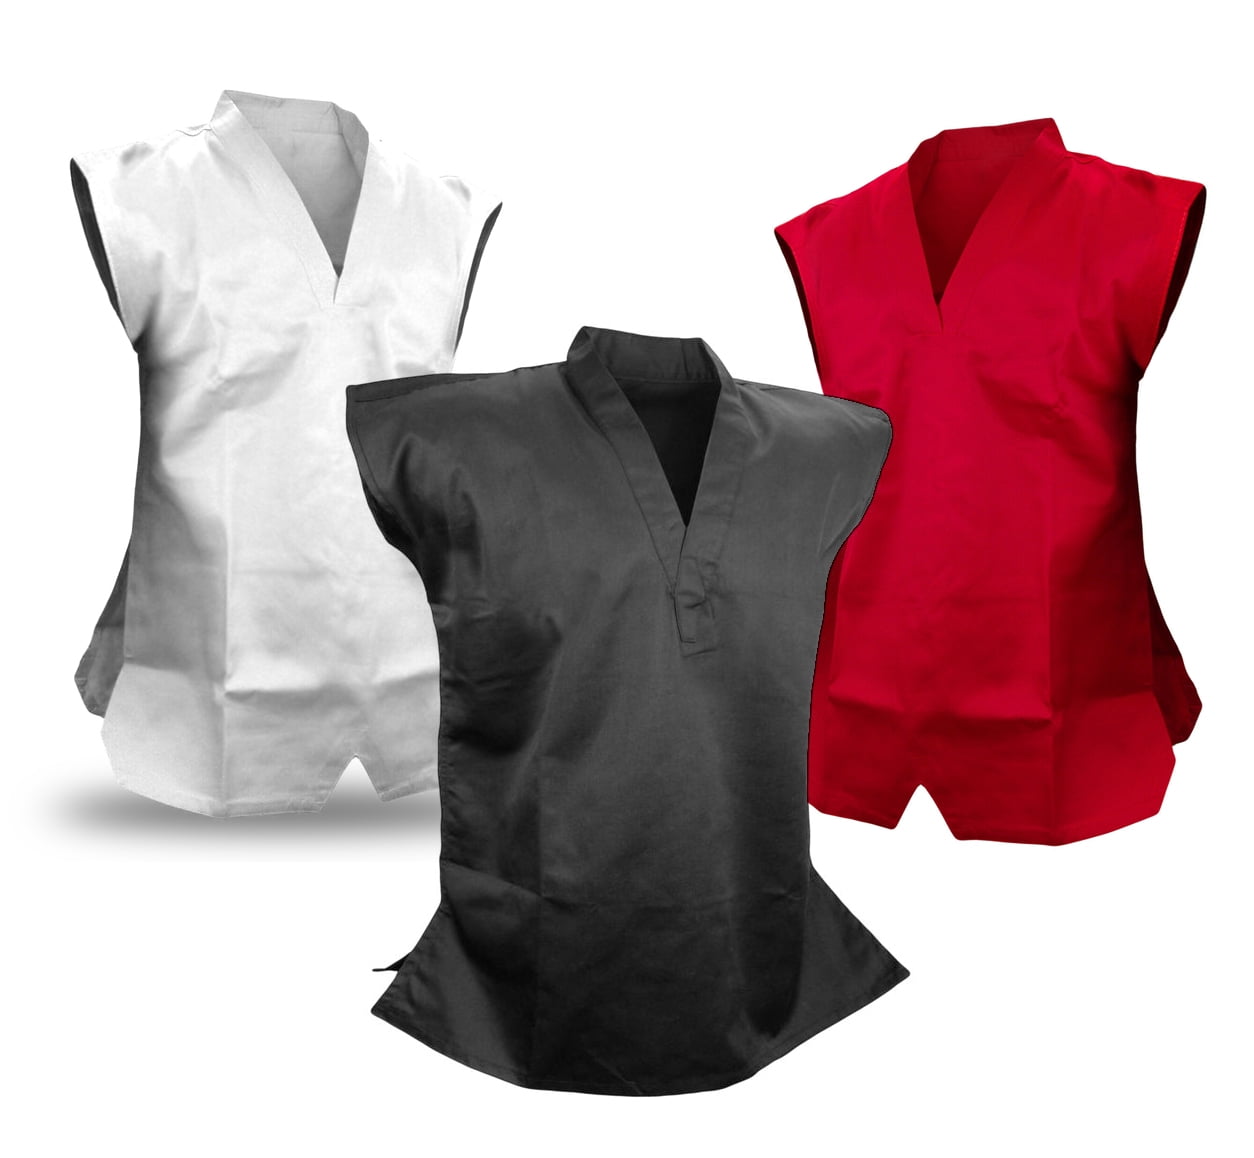 Martial Arts Uniform Sleeveless Gi Top for Karate Taekwondo Black/White/Red 